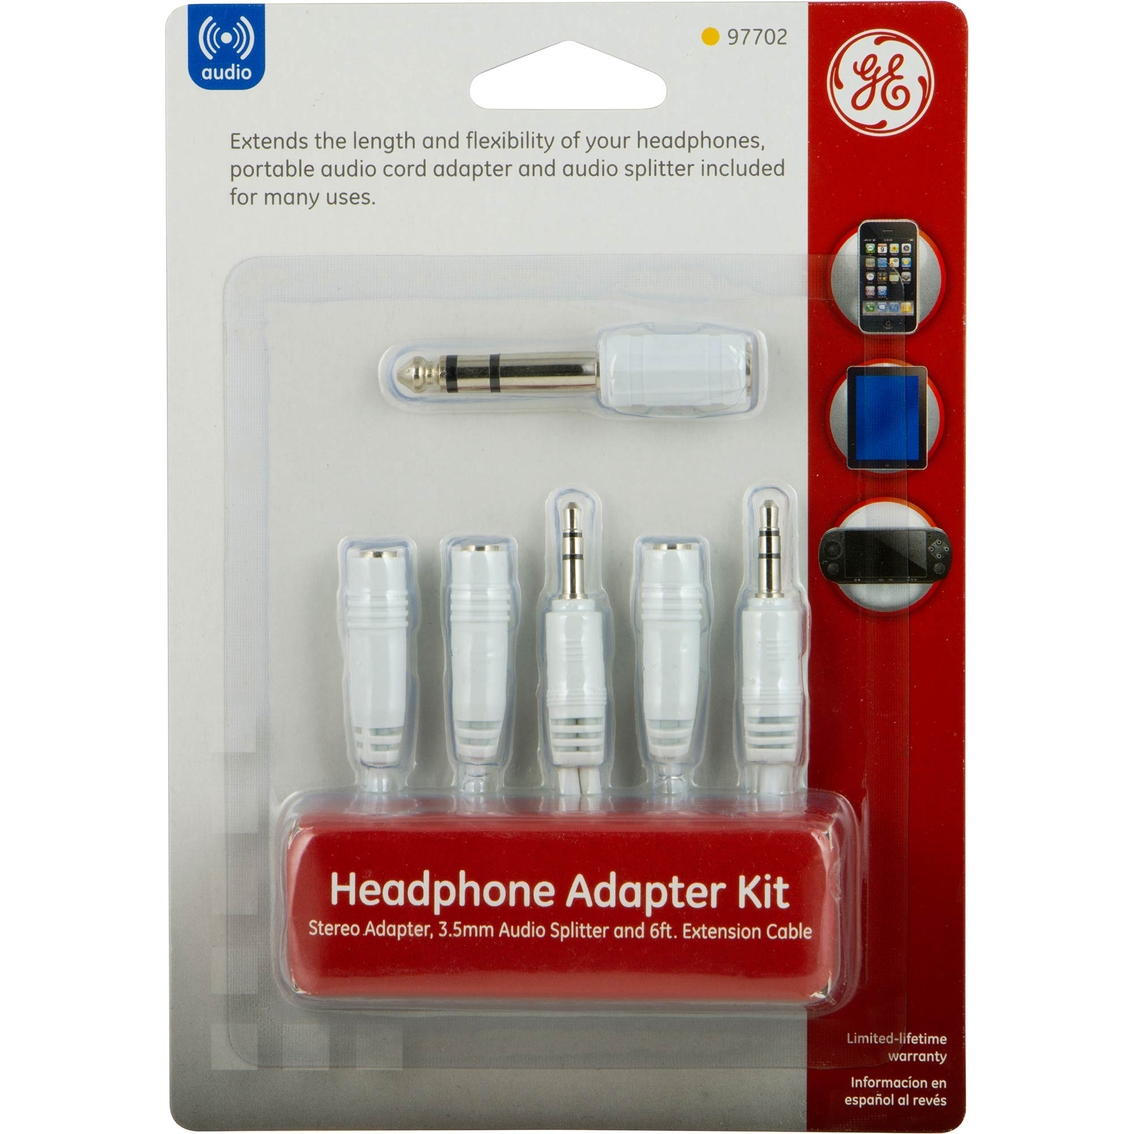 GE Headphone Adapter Kit - Image 2 of 2